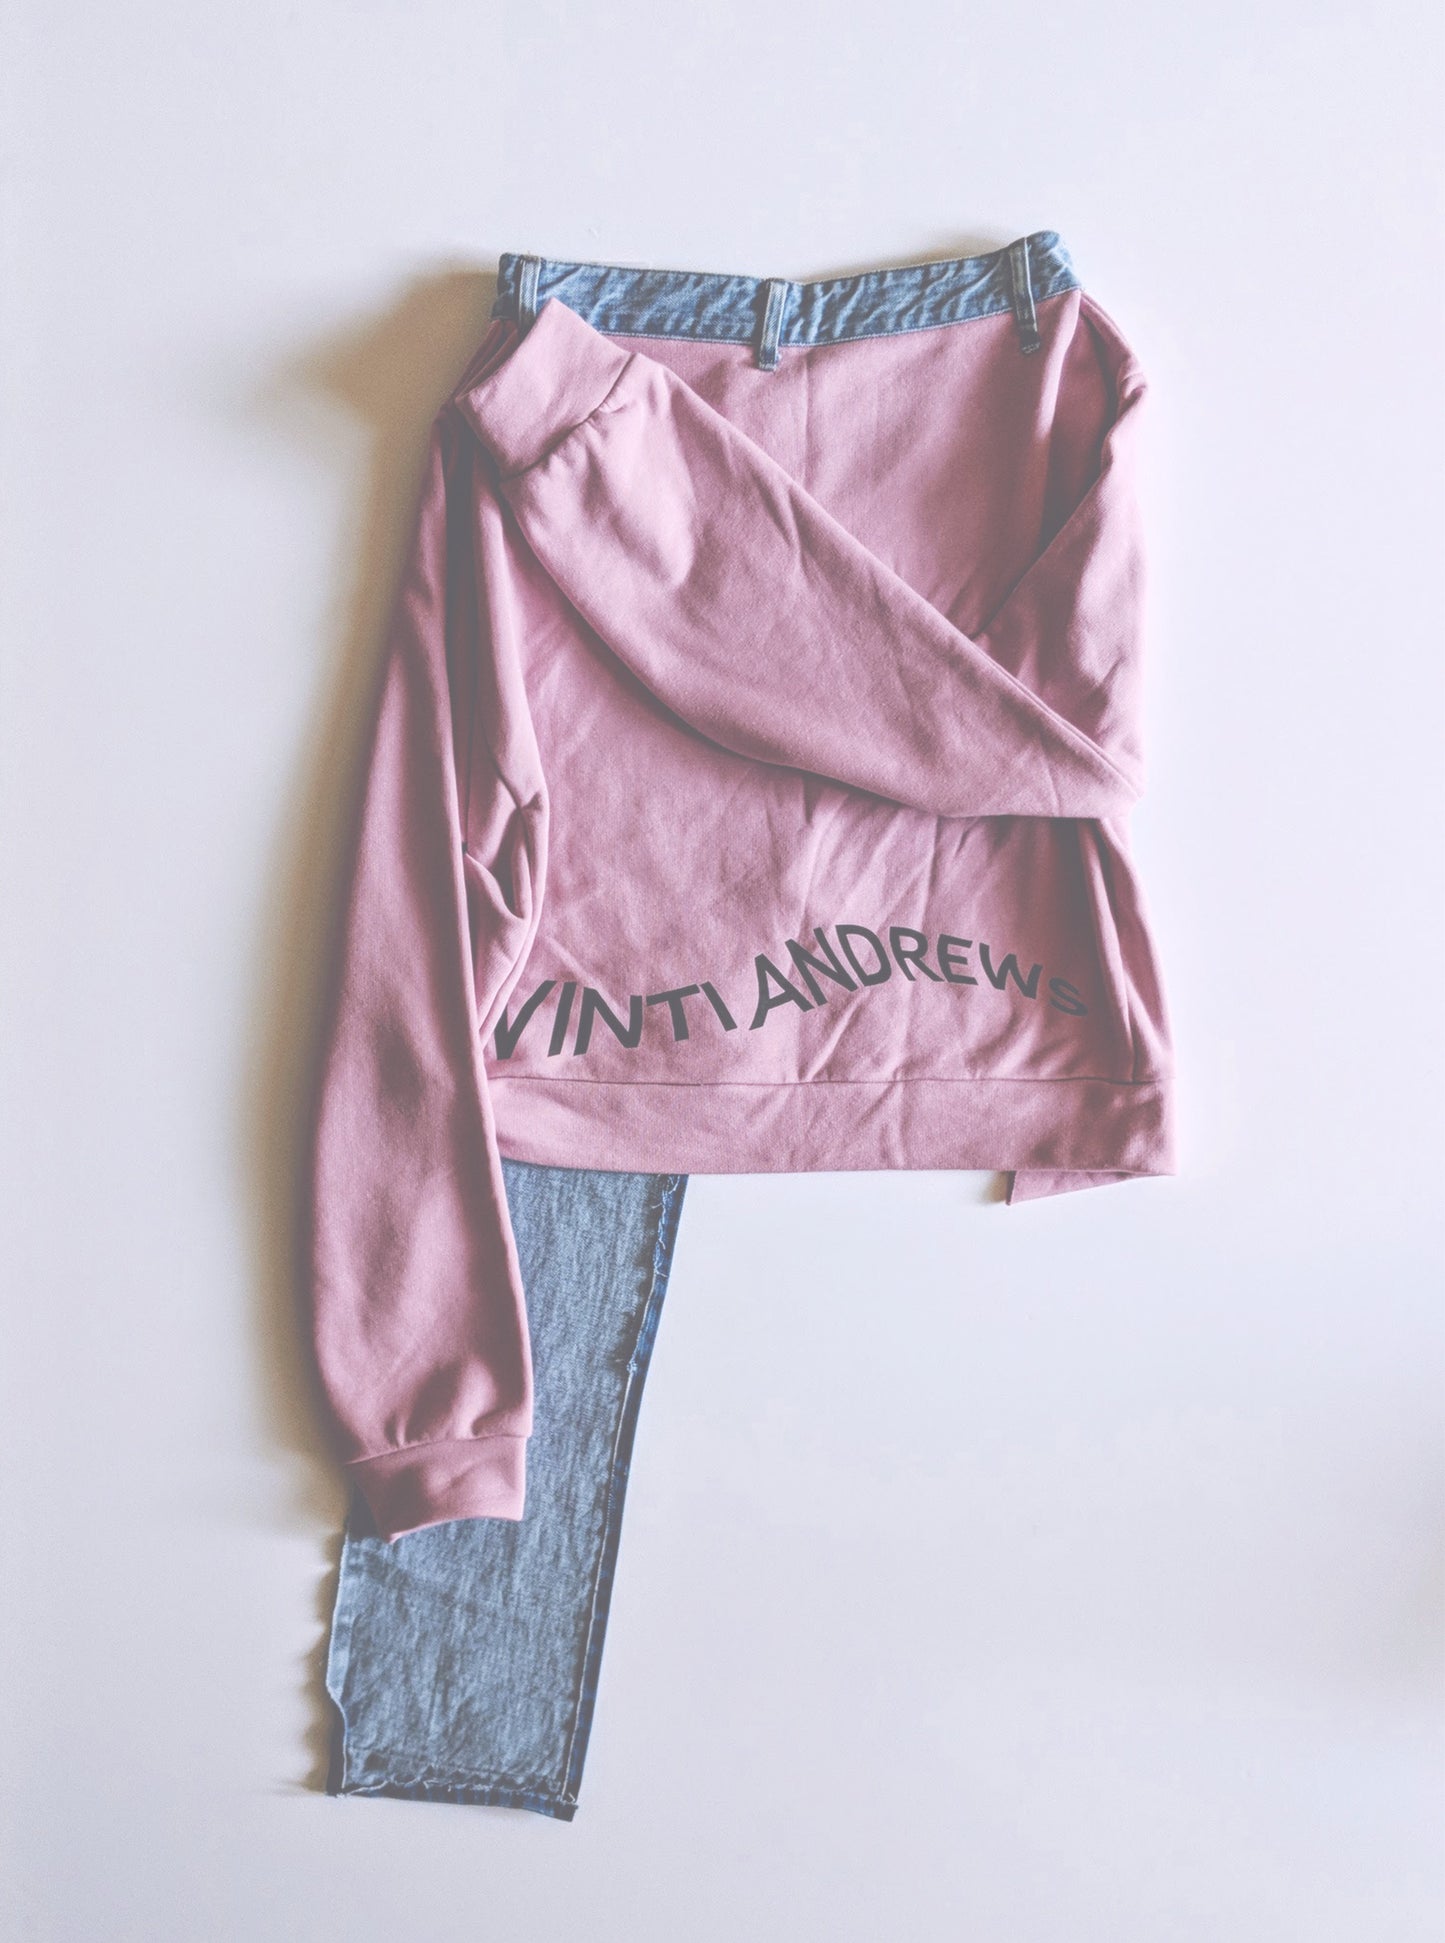  Vinti Andrews Sweater Jean Skirt